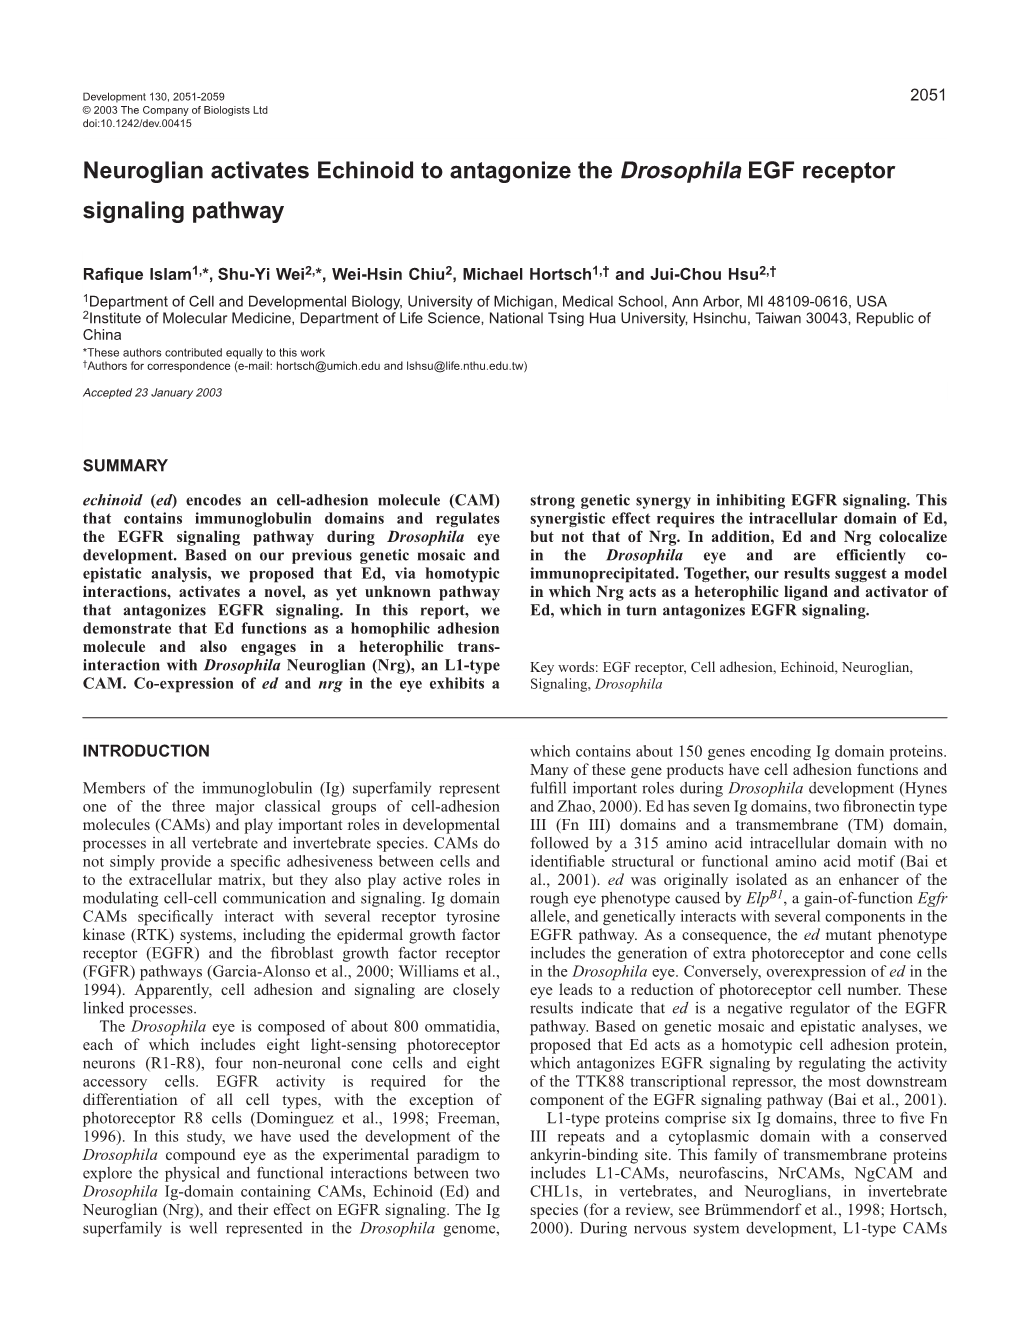 Neuroglian Activates Echinoid to Antagonize the Drosophila EGF Receptor Signaling Pathway